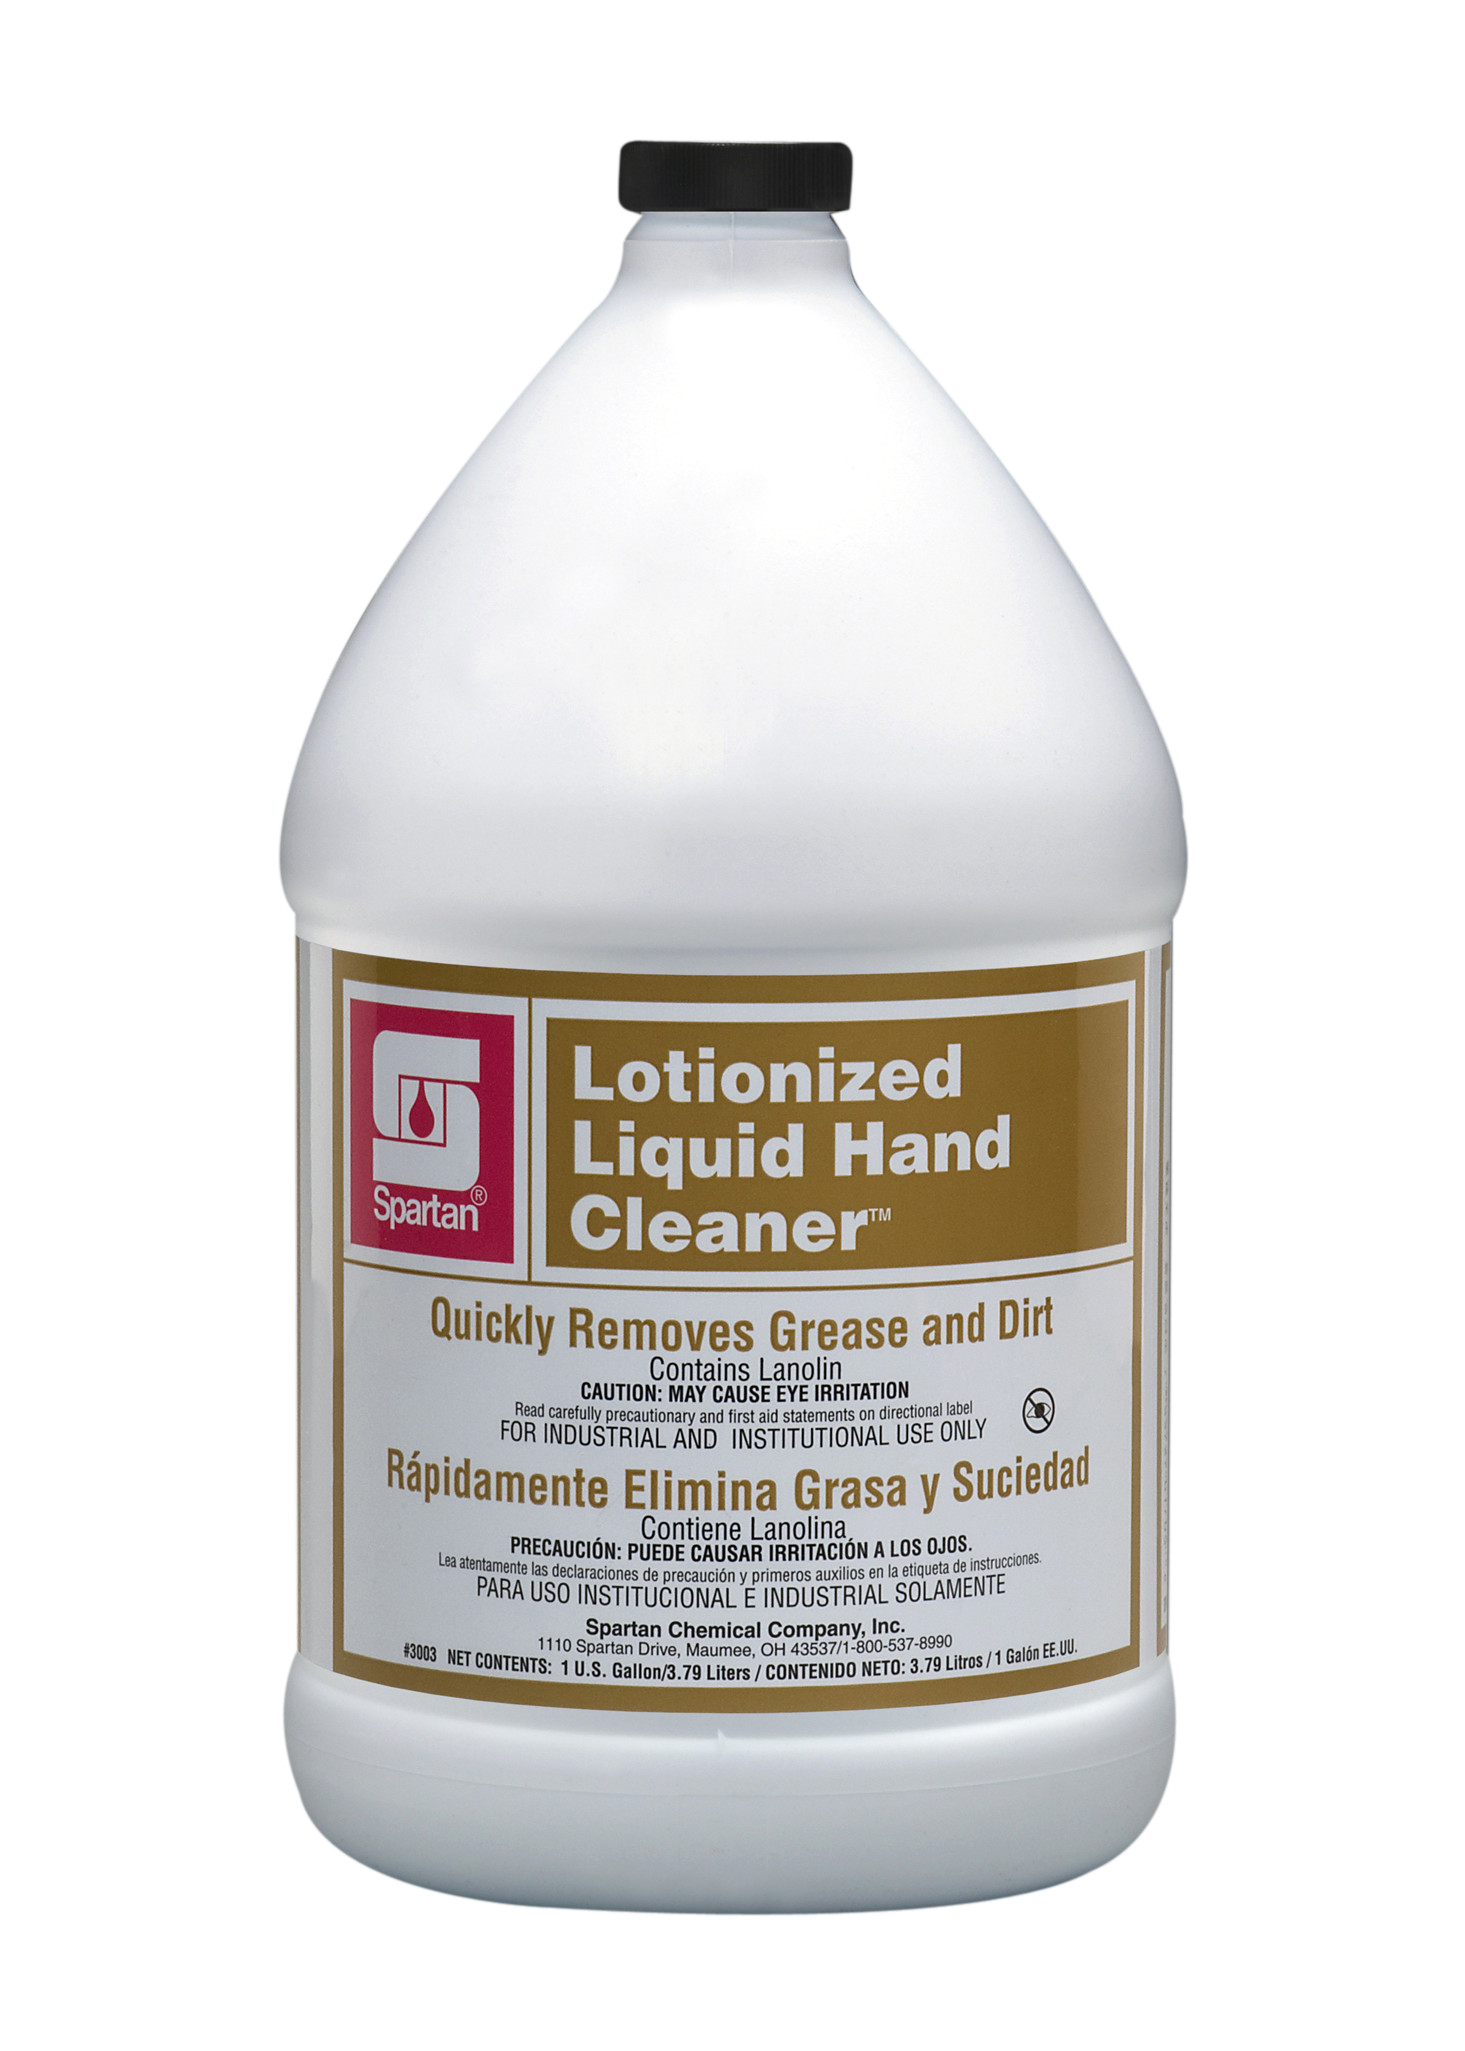 Spartan Chemical Company Lotionized Liquid Hand Cleaner, 1 Gallon Jug